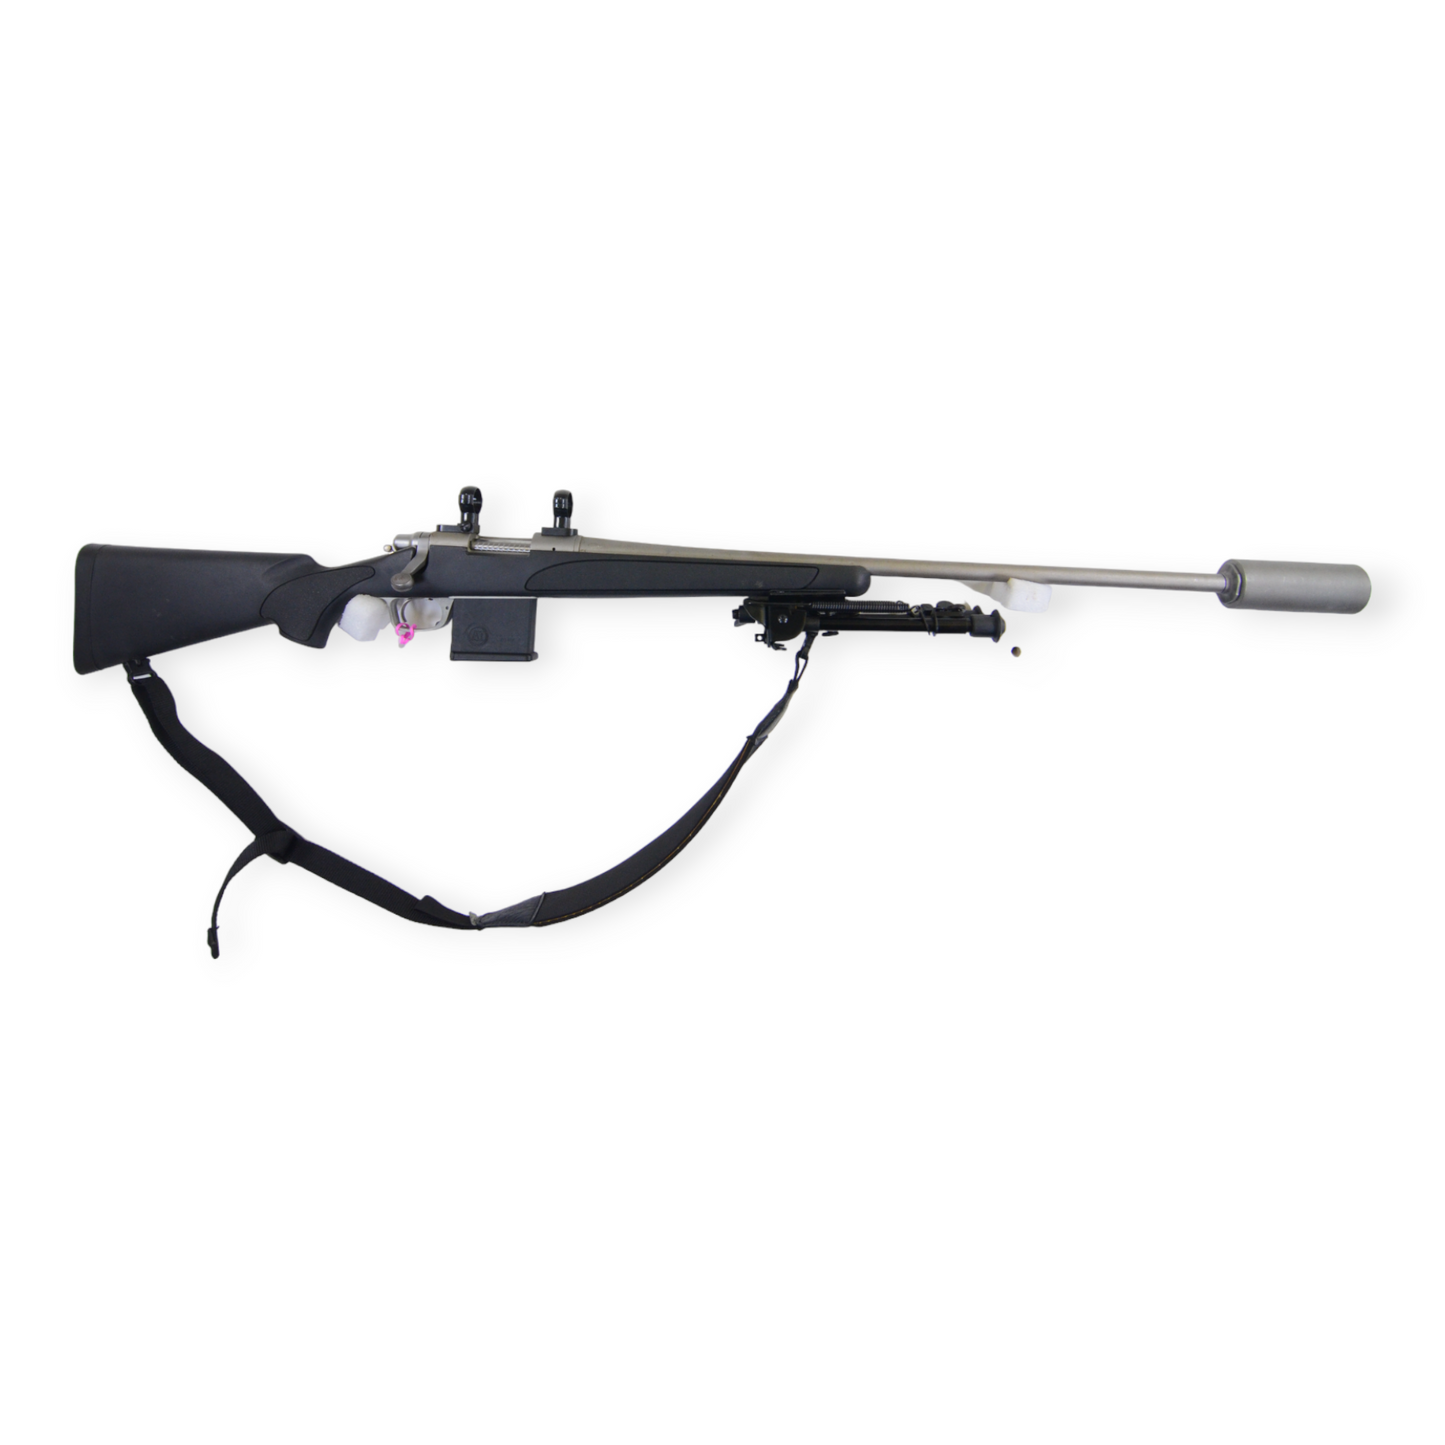 Remington 700 .223 Rifle - 5584